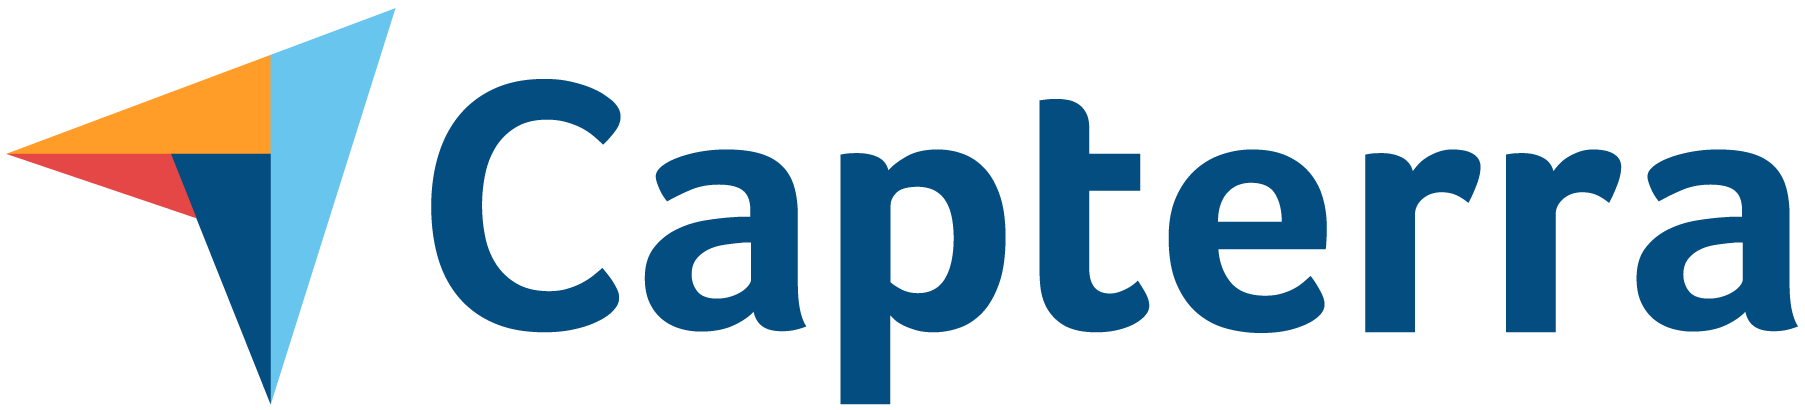 Capterra-logo logo